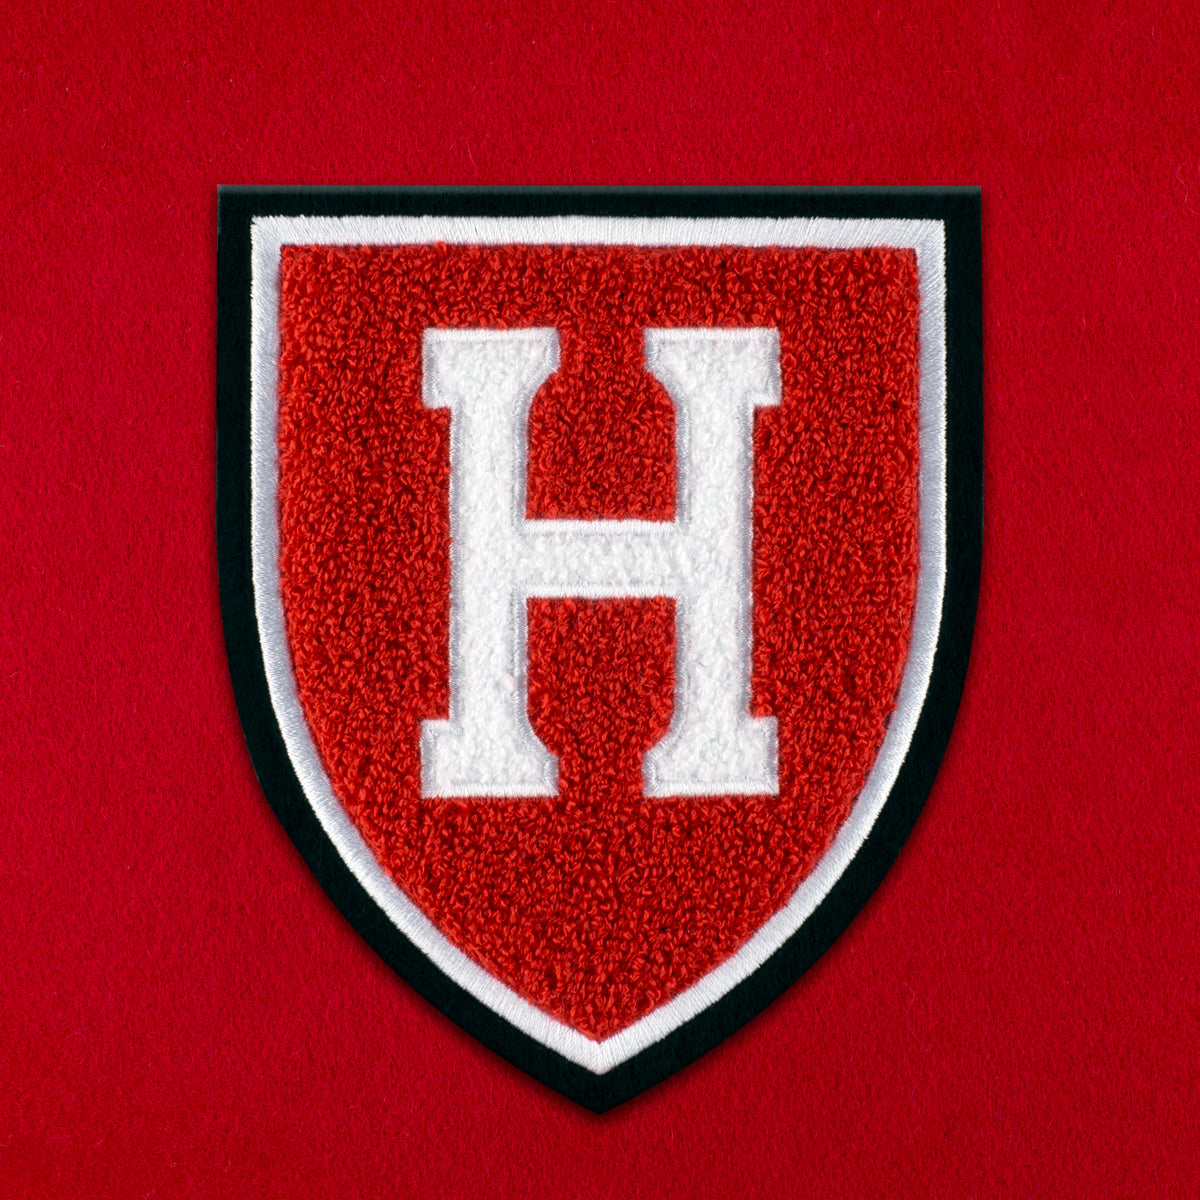 Harvard Crimson "H" Weekender Duffle Bag